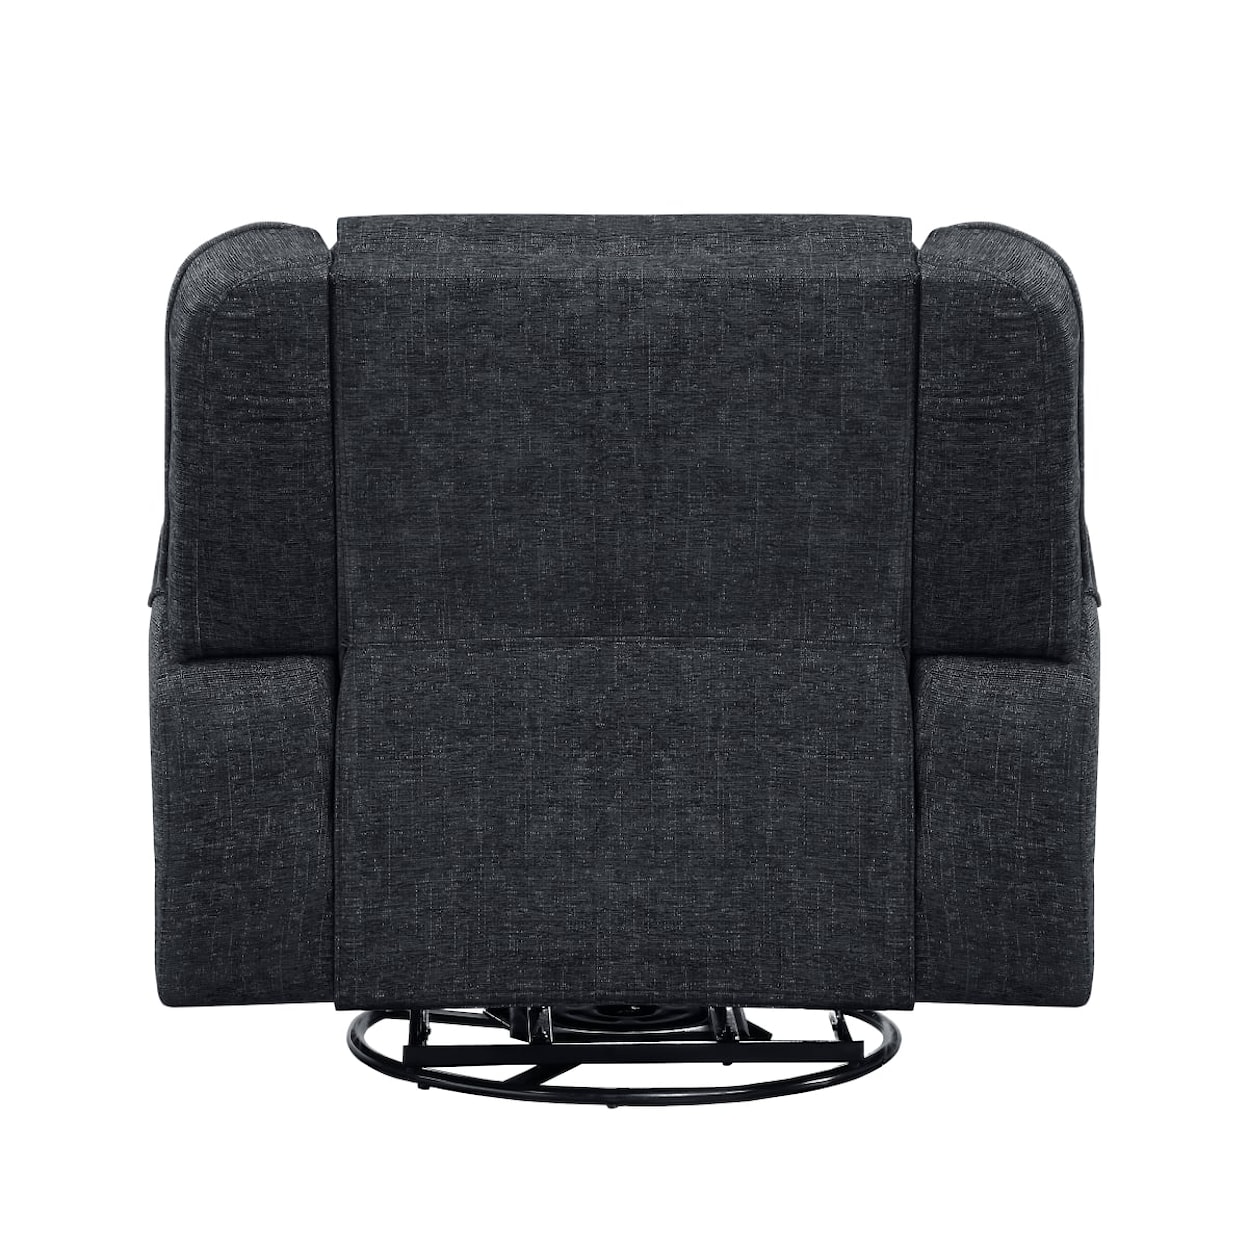 Homelegance Furniture Monterey Swivel Reclining Chair